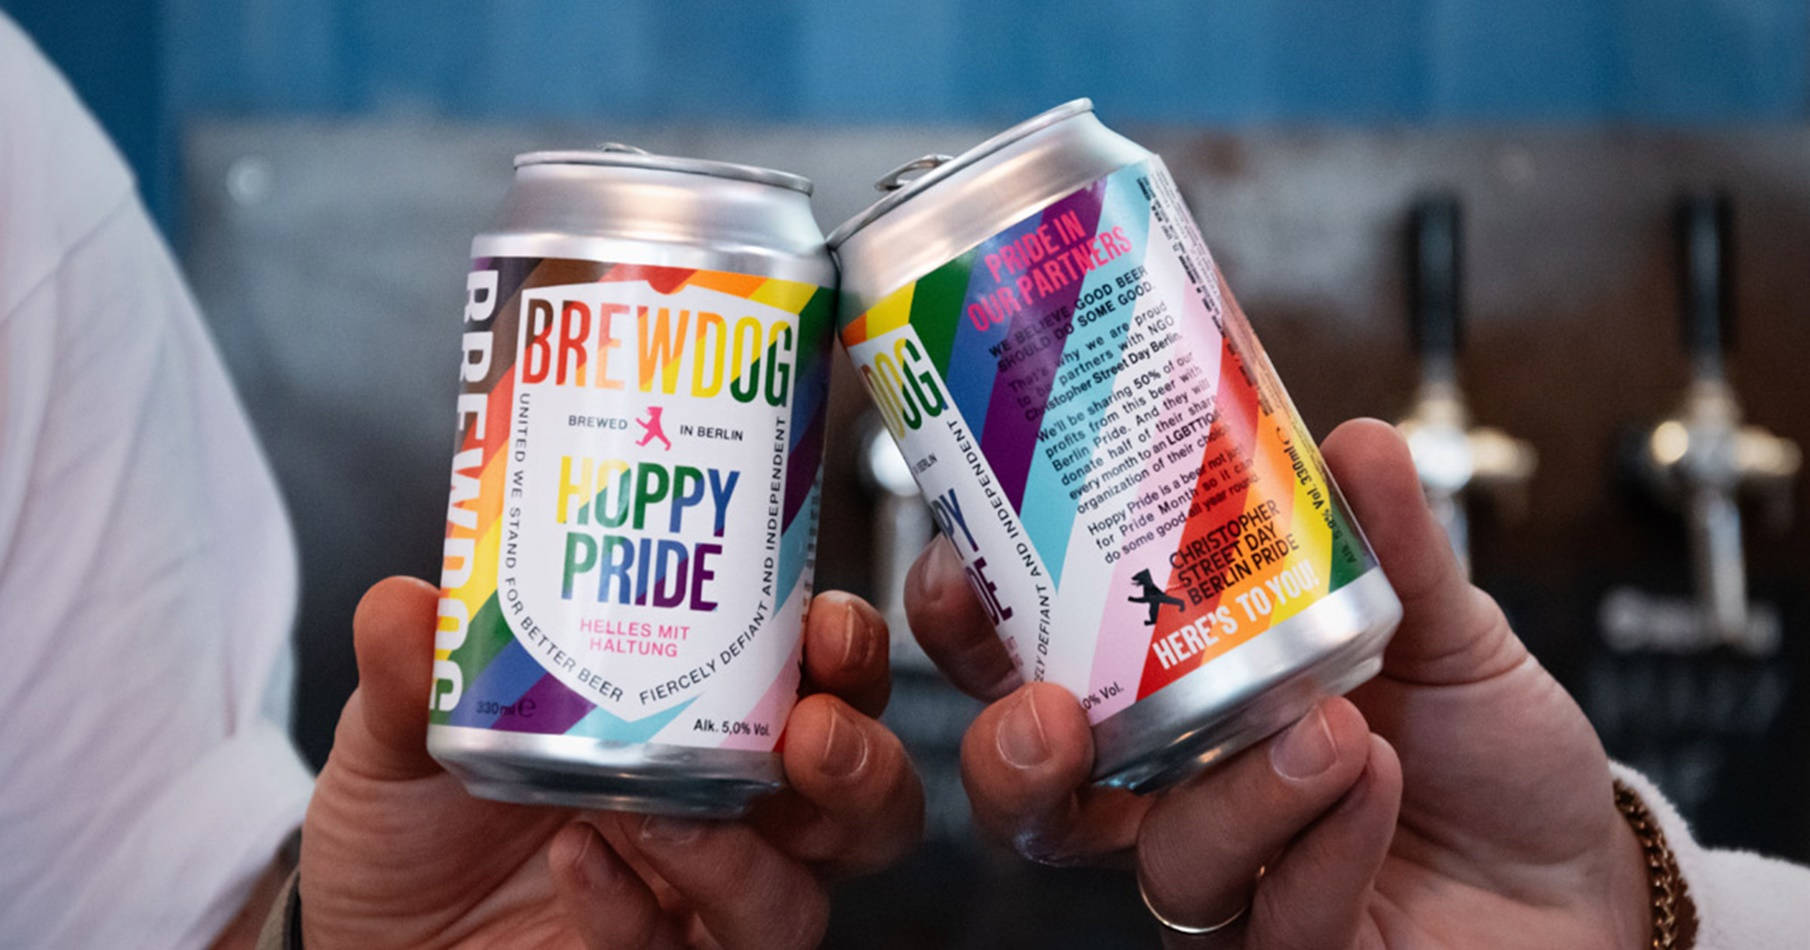 Brewdog Hoppy Pride Beer Cans Wallpaper